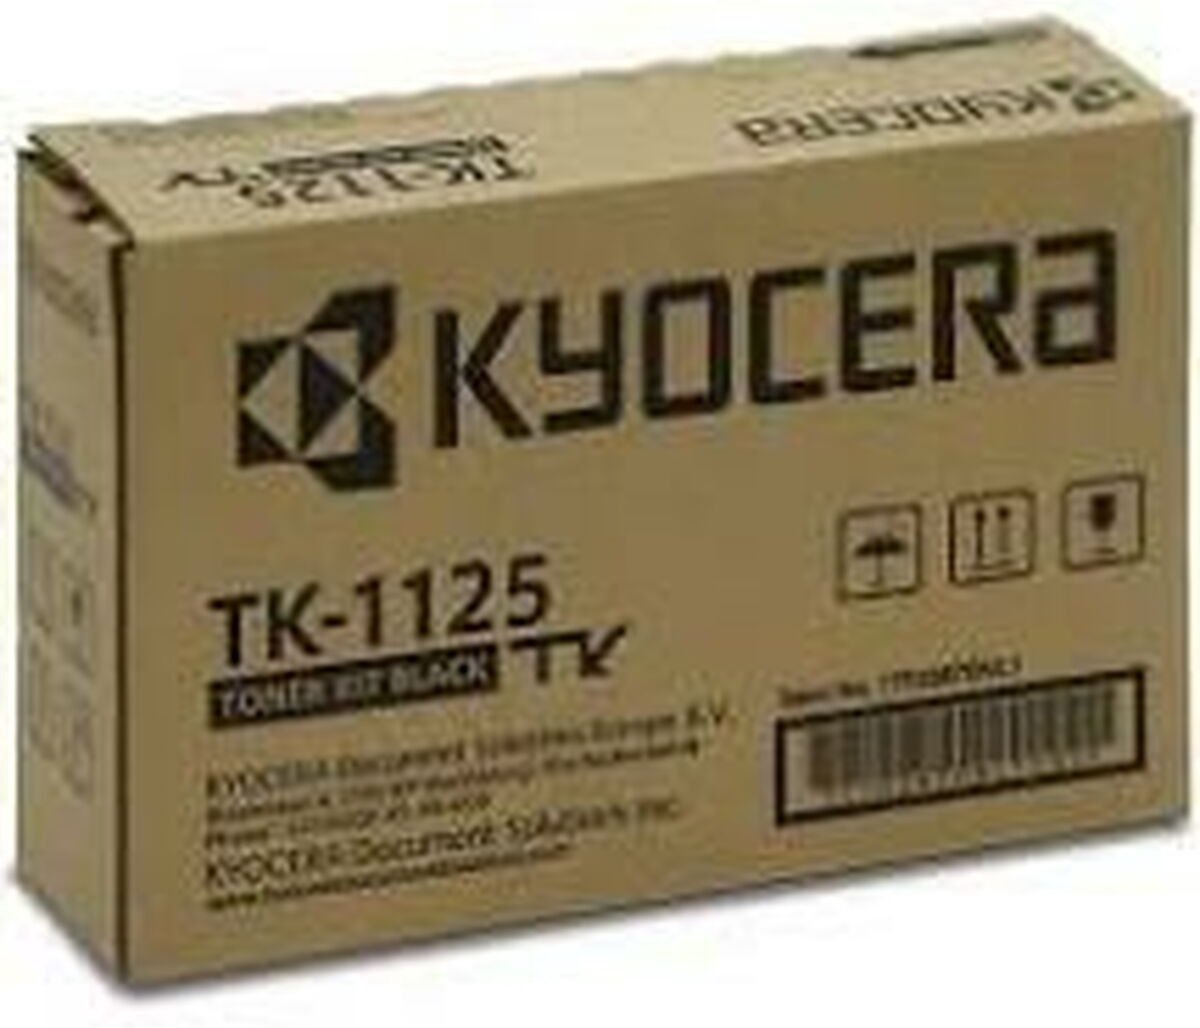 Kyocera - TK-1125 - Tonercartridge - 1 stuk - Origineel - Zwart